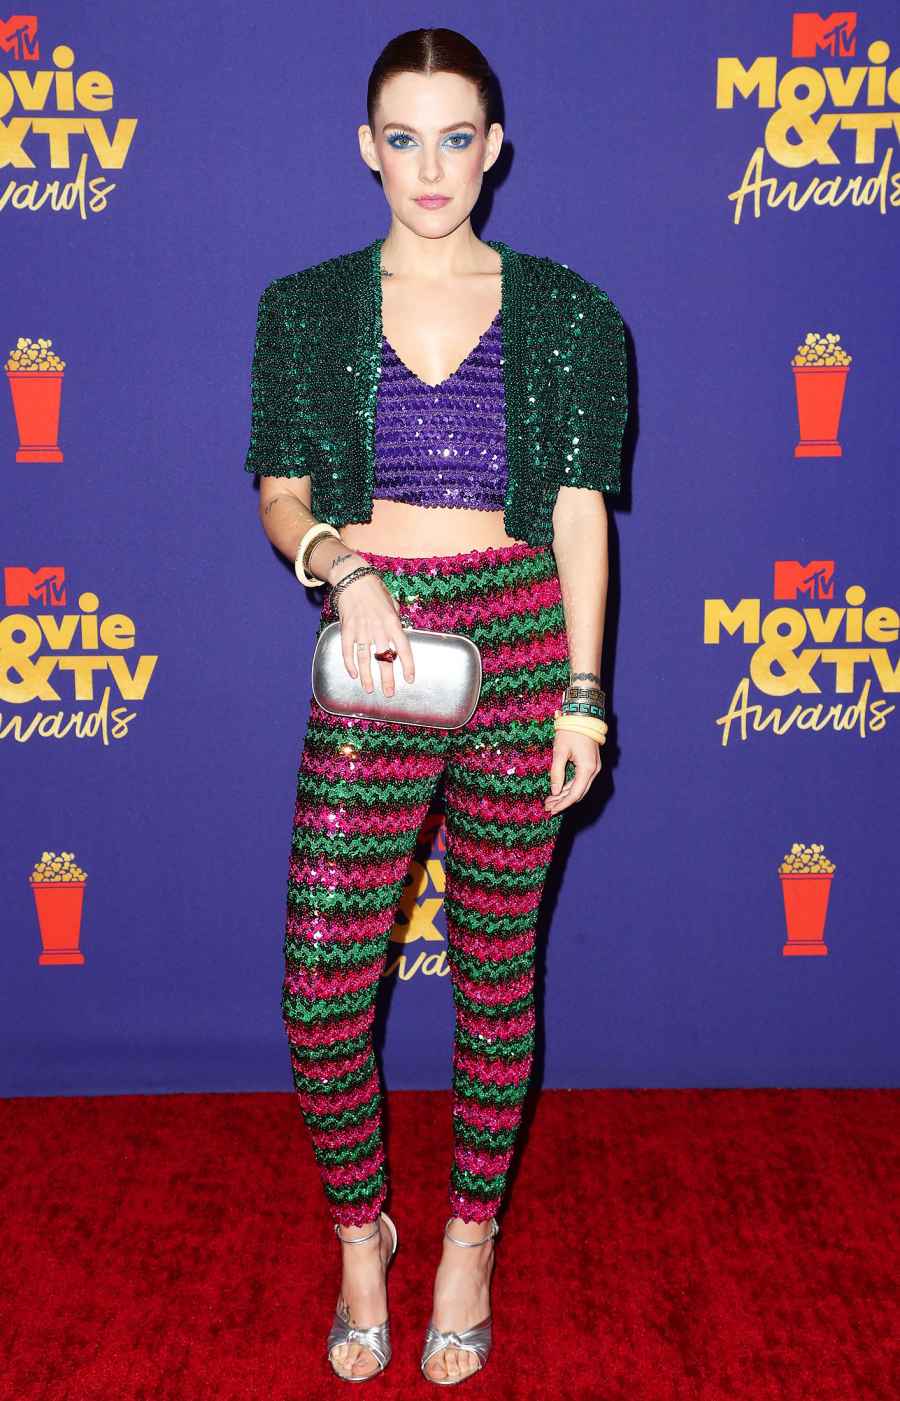 MTV Movie & TV Awards Red Carpet Arrivals - Riley Keough